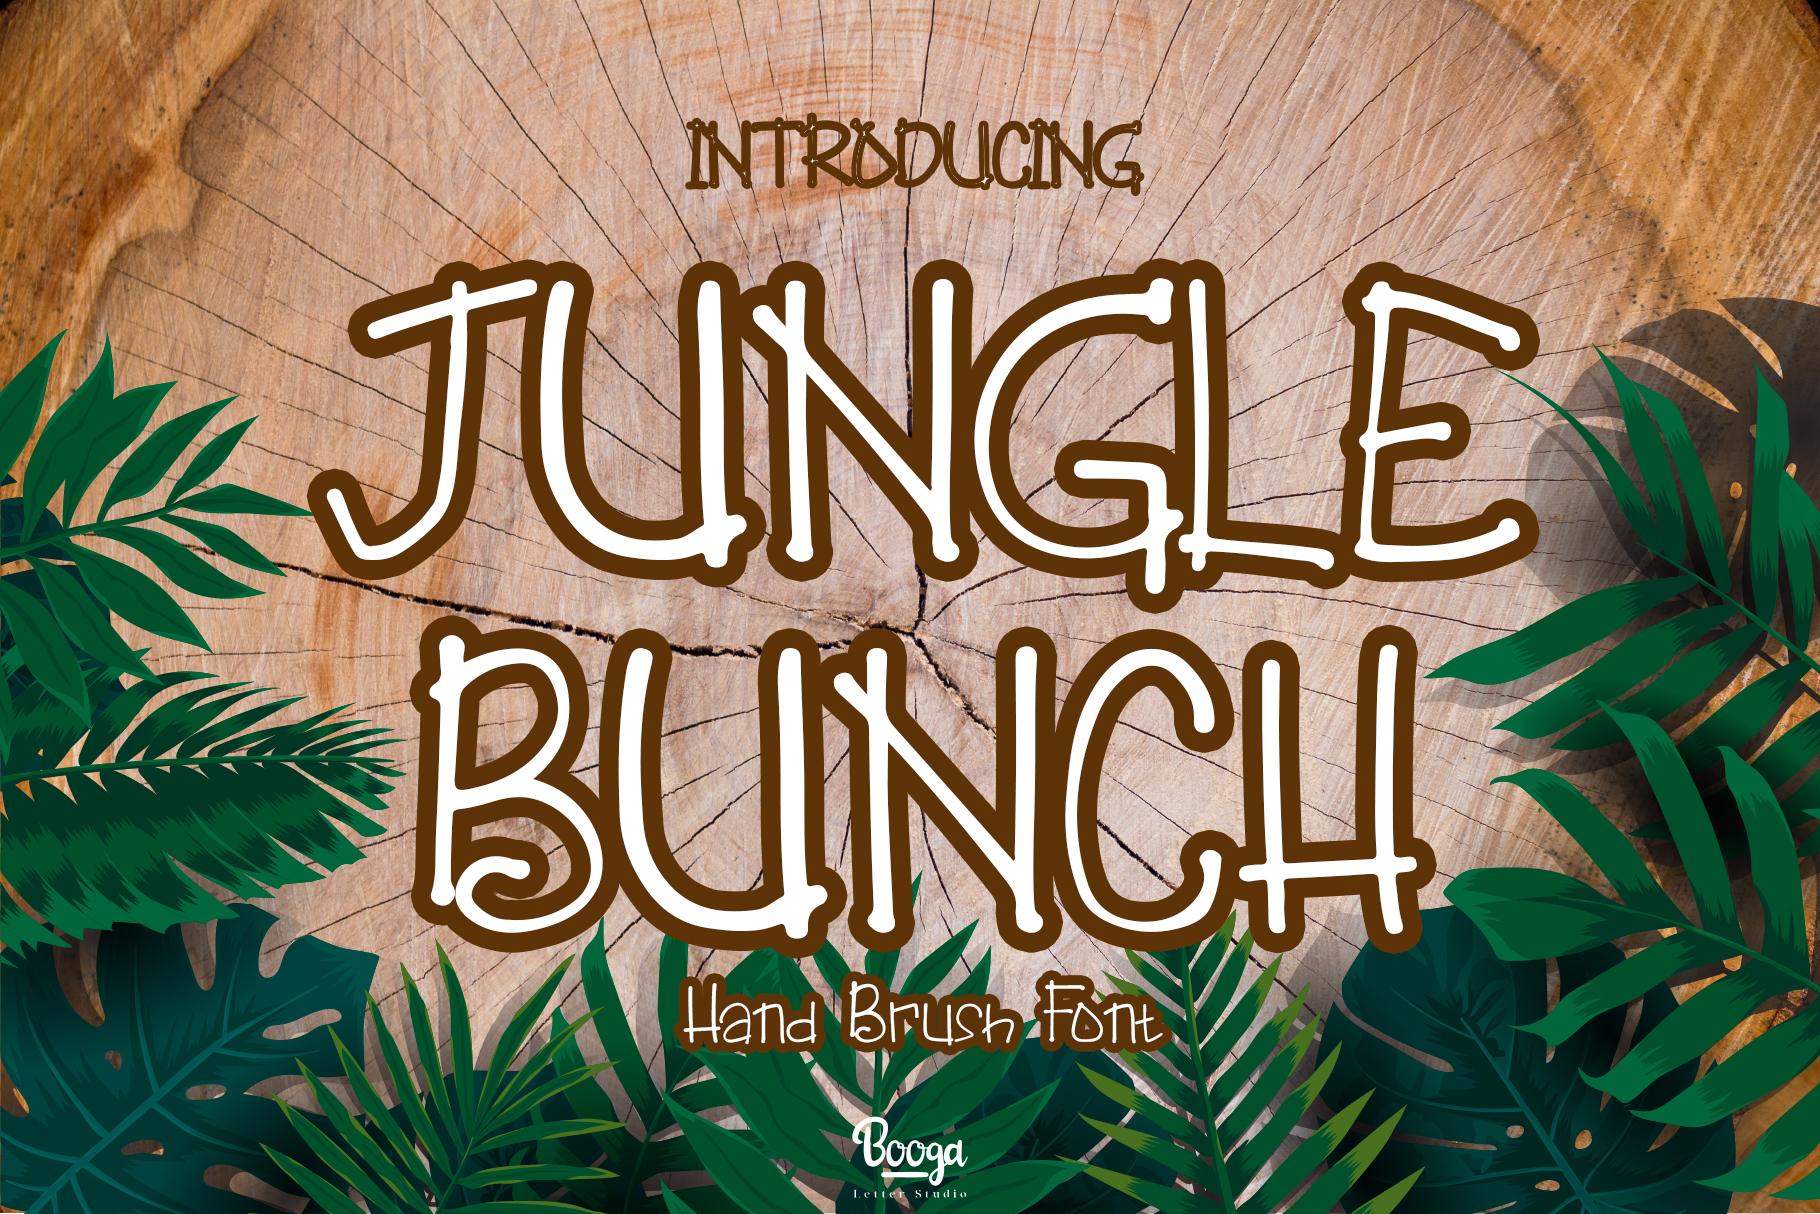 Jungle Bunch Font